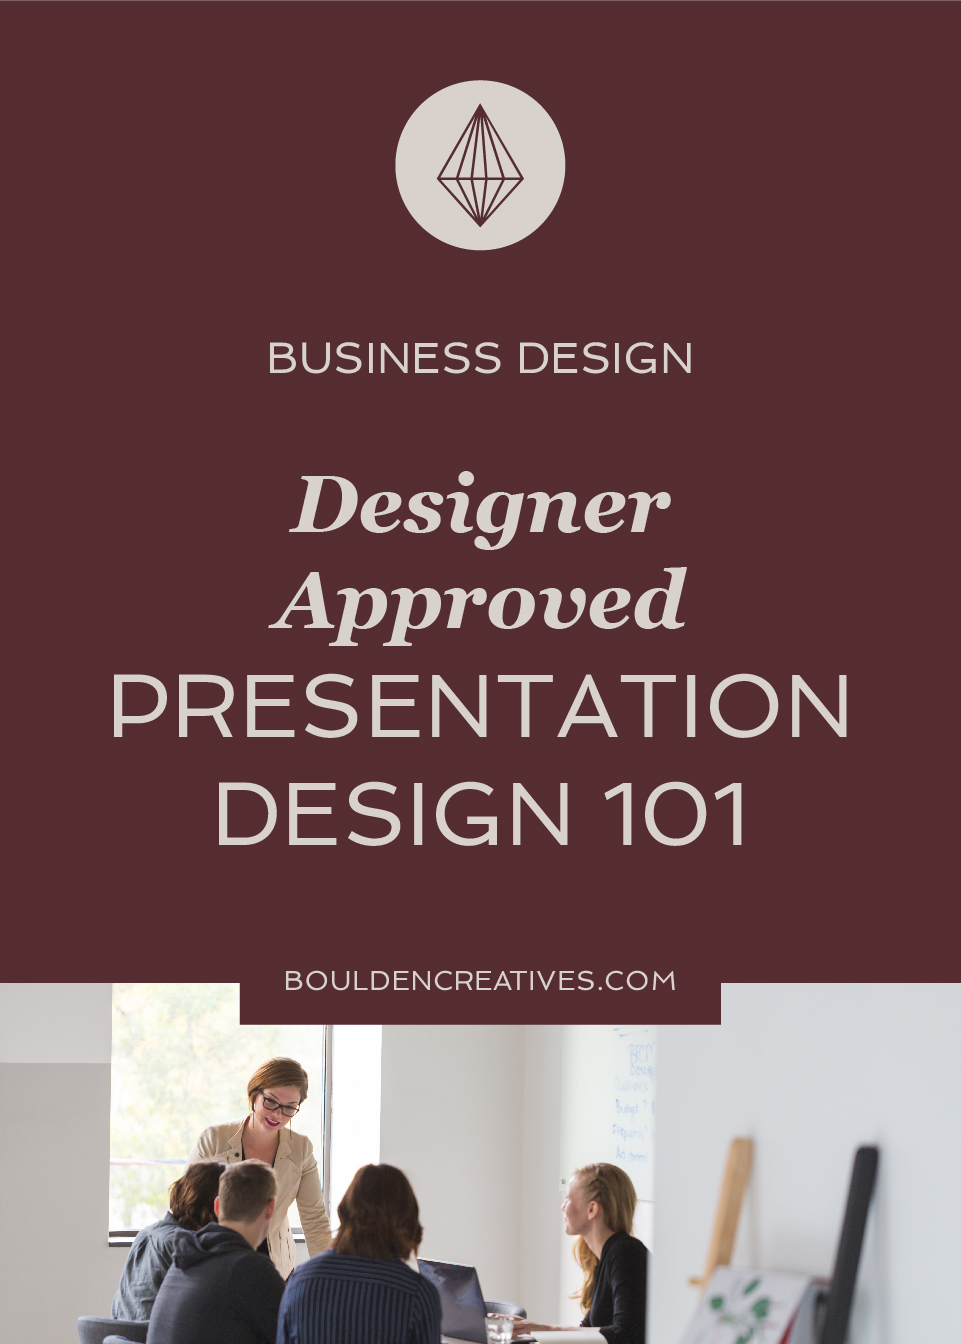 Presentation Design 101